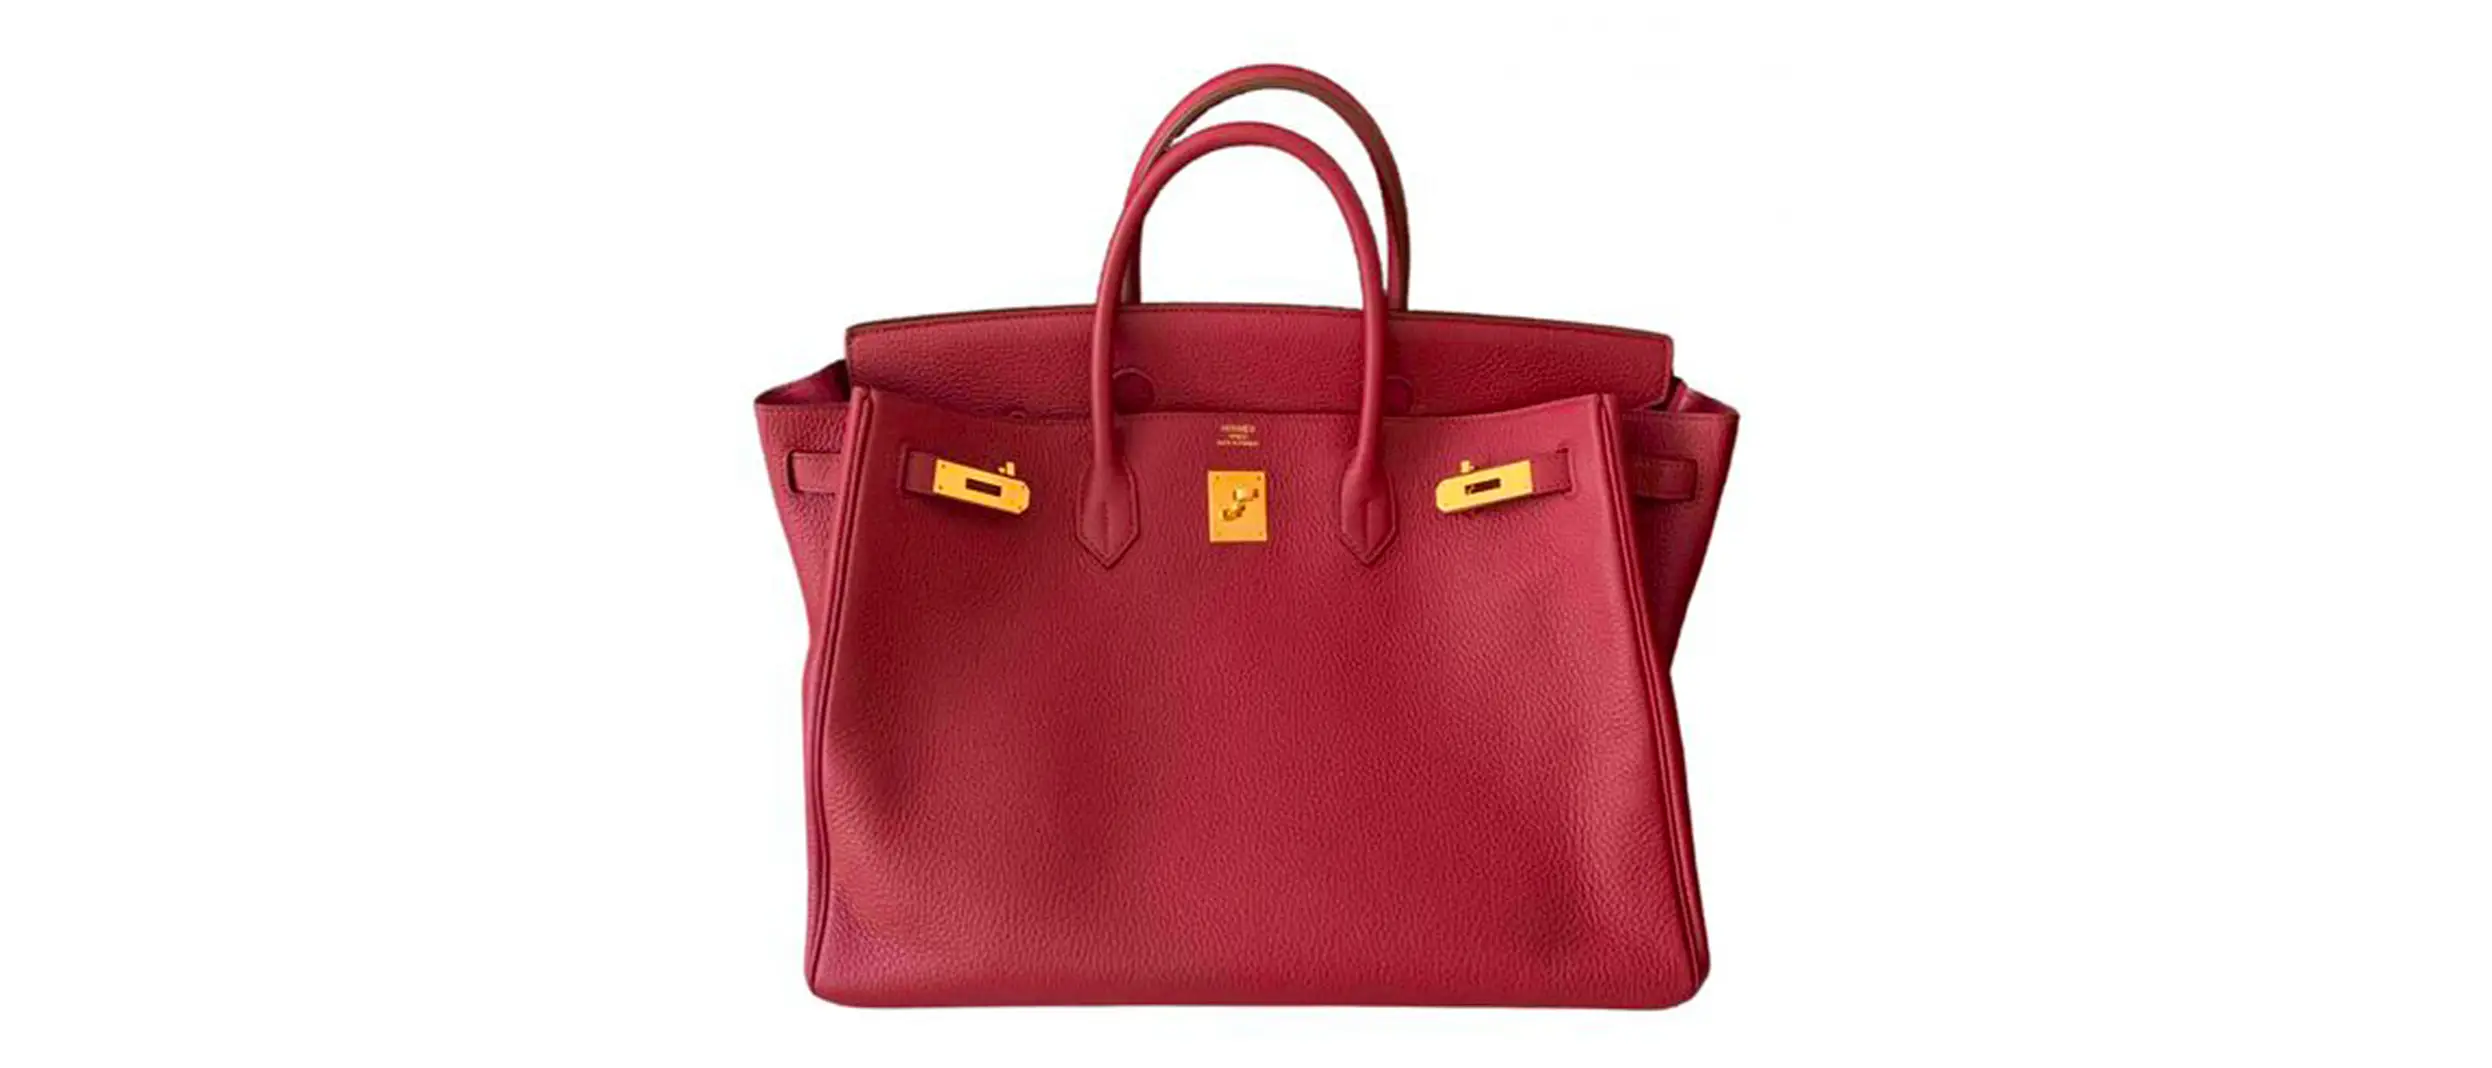 hermes-birkin-40-handbag-in-red-leather.jpg